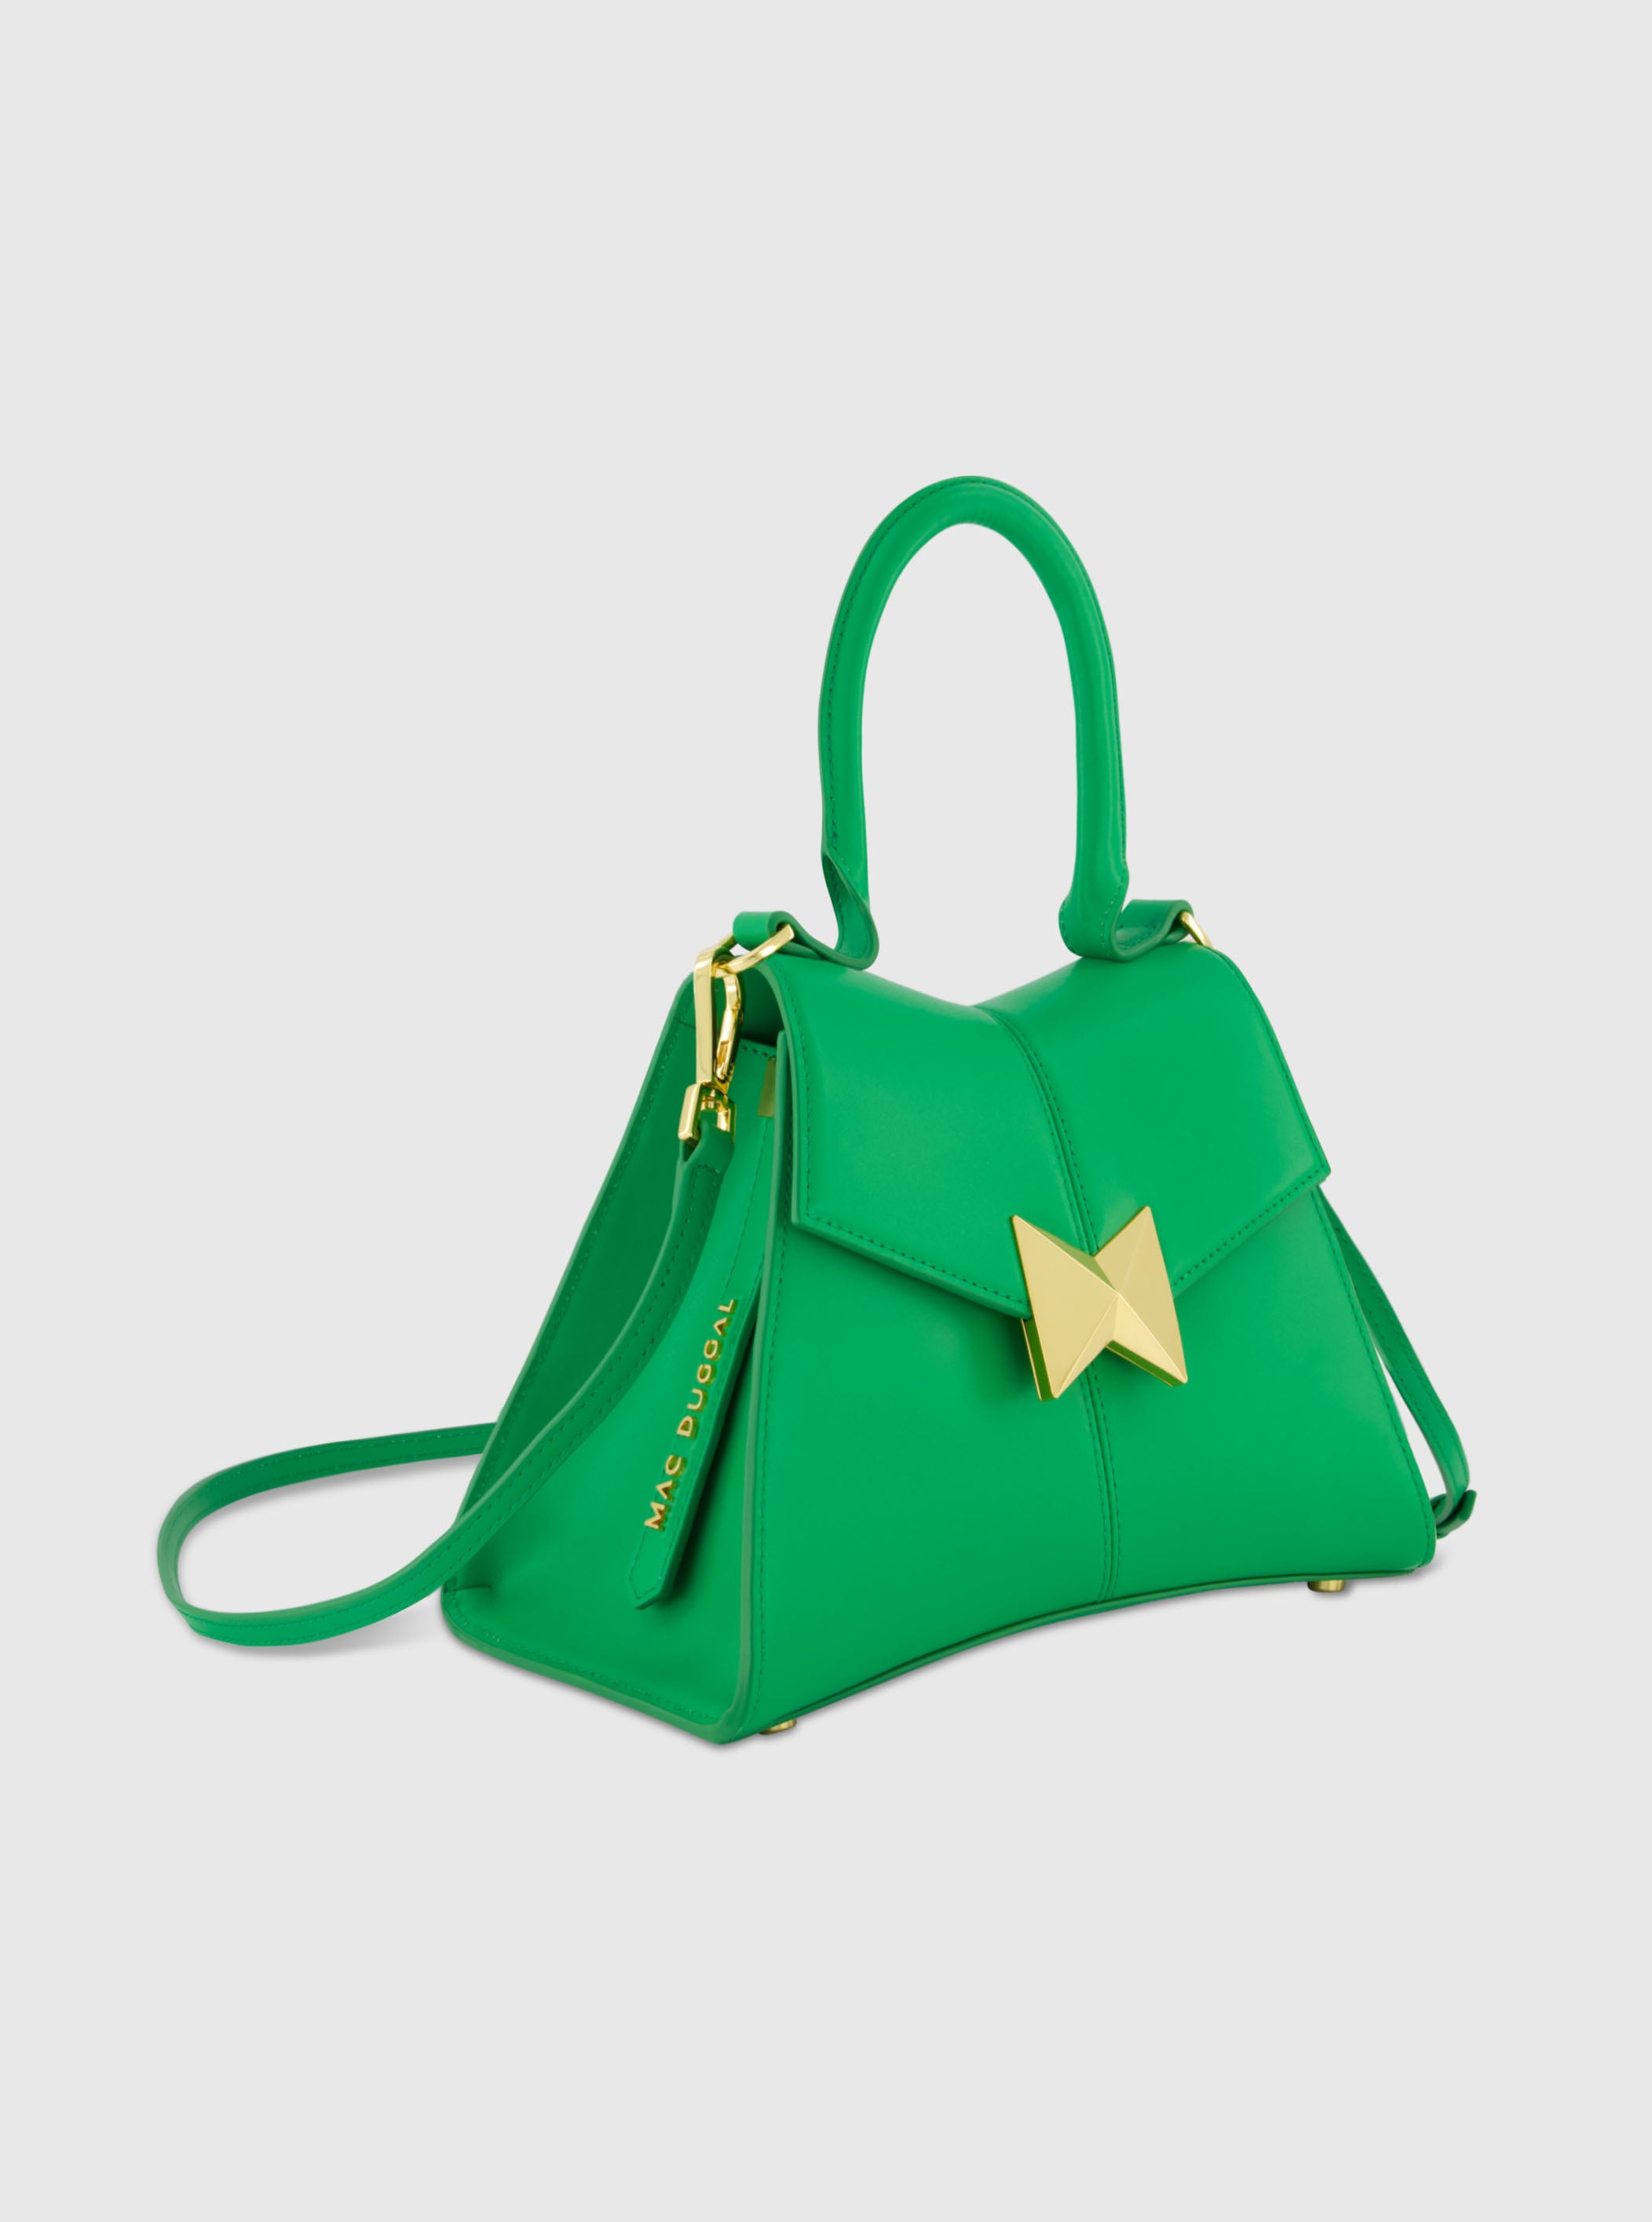 Angular Small Green Leather Handbag With Gold Hardware